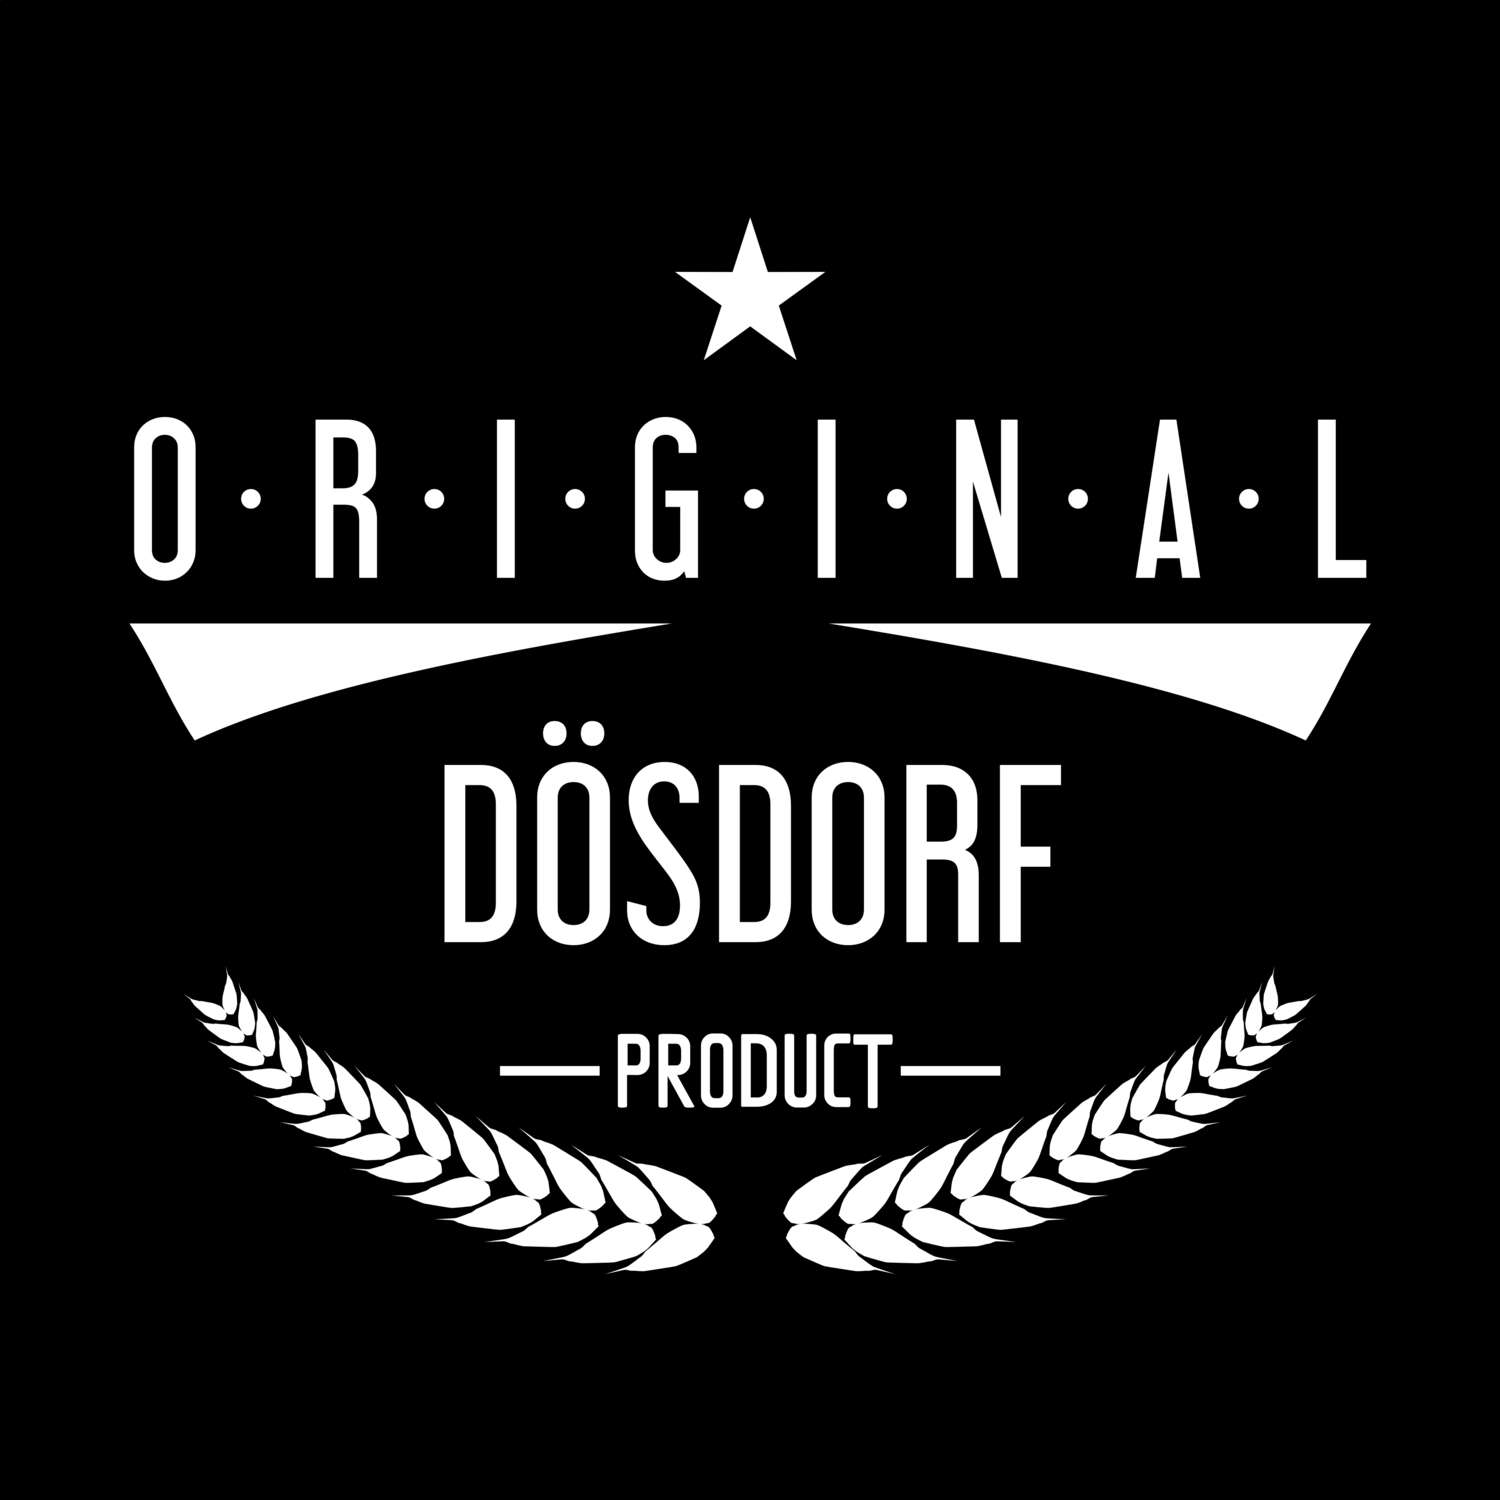 Dösdorf T-Shirt »Original Product«